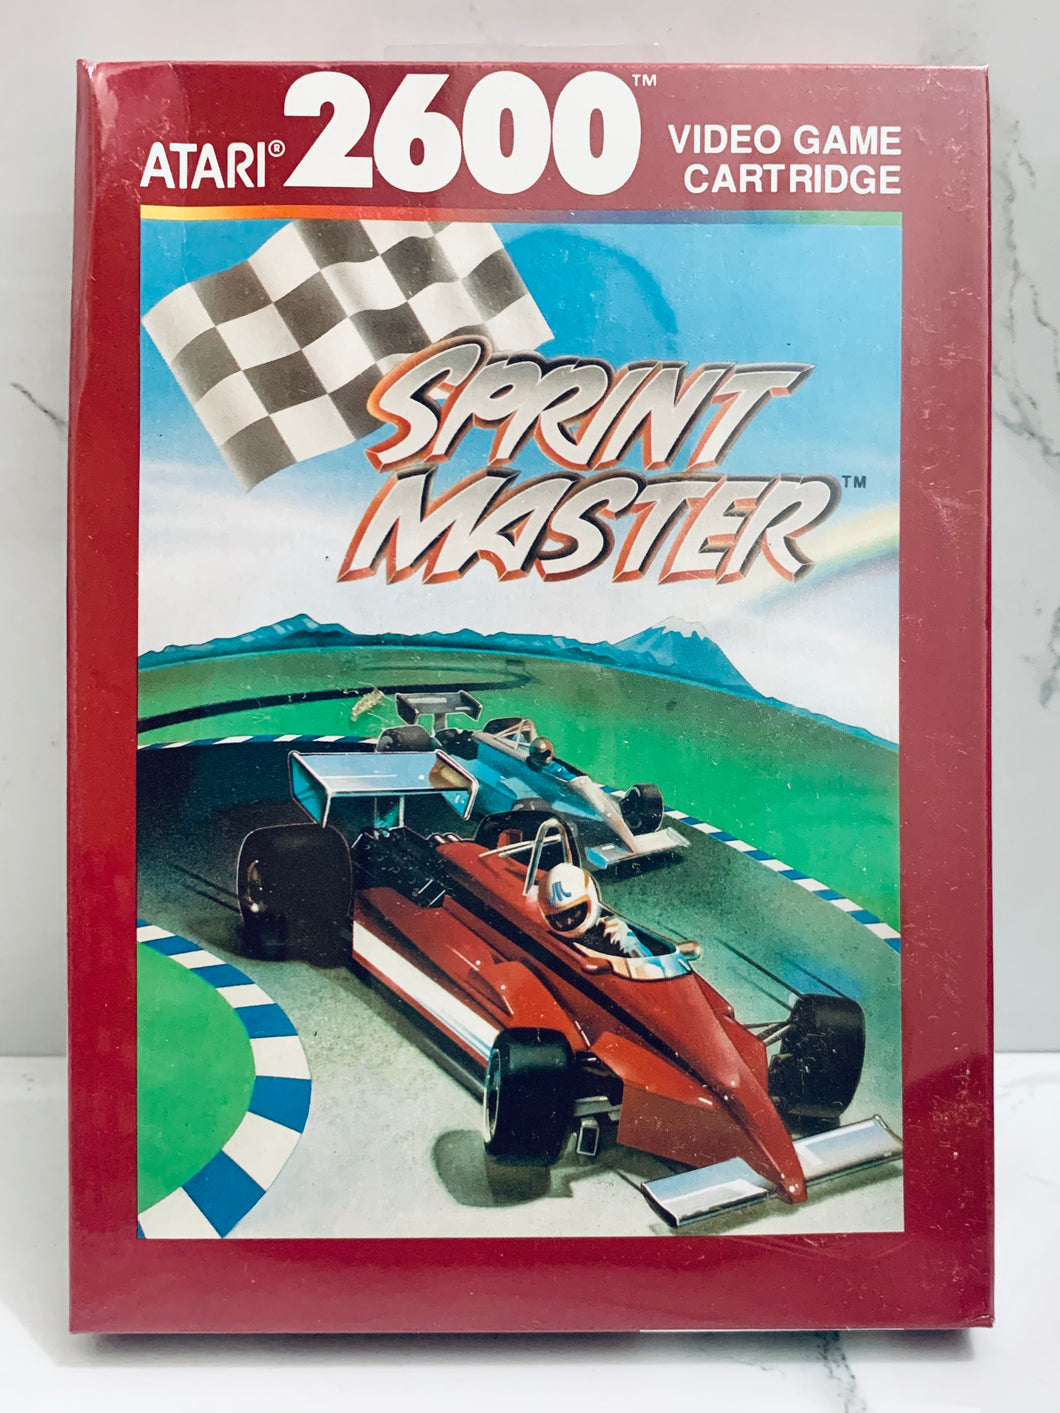 Sprintmaster - Atari VCS 2600 - NTSC - Brand New